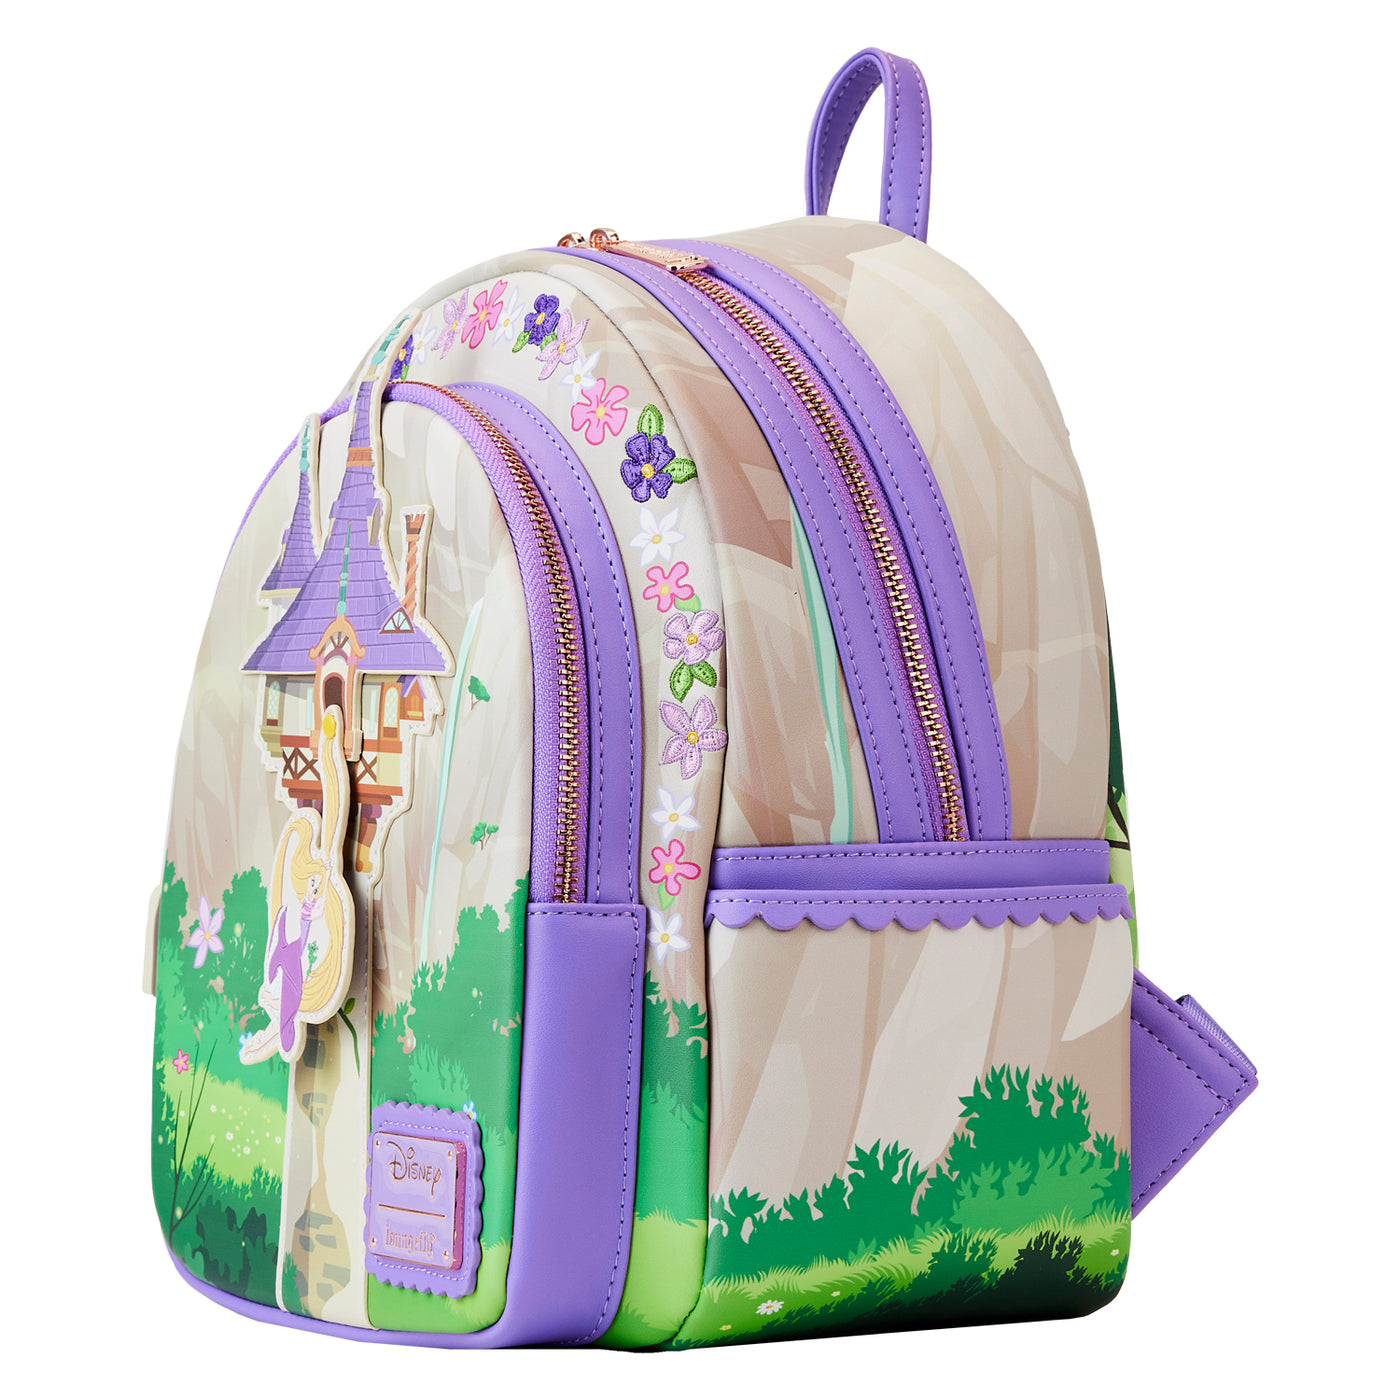 Disney Tangled Rapunzel Swinging from Tower Mini Backpack